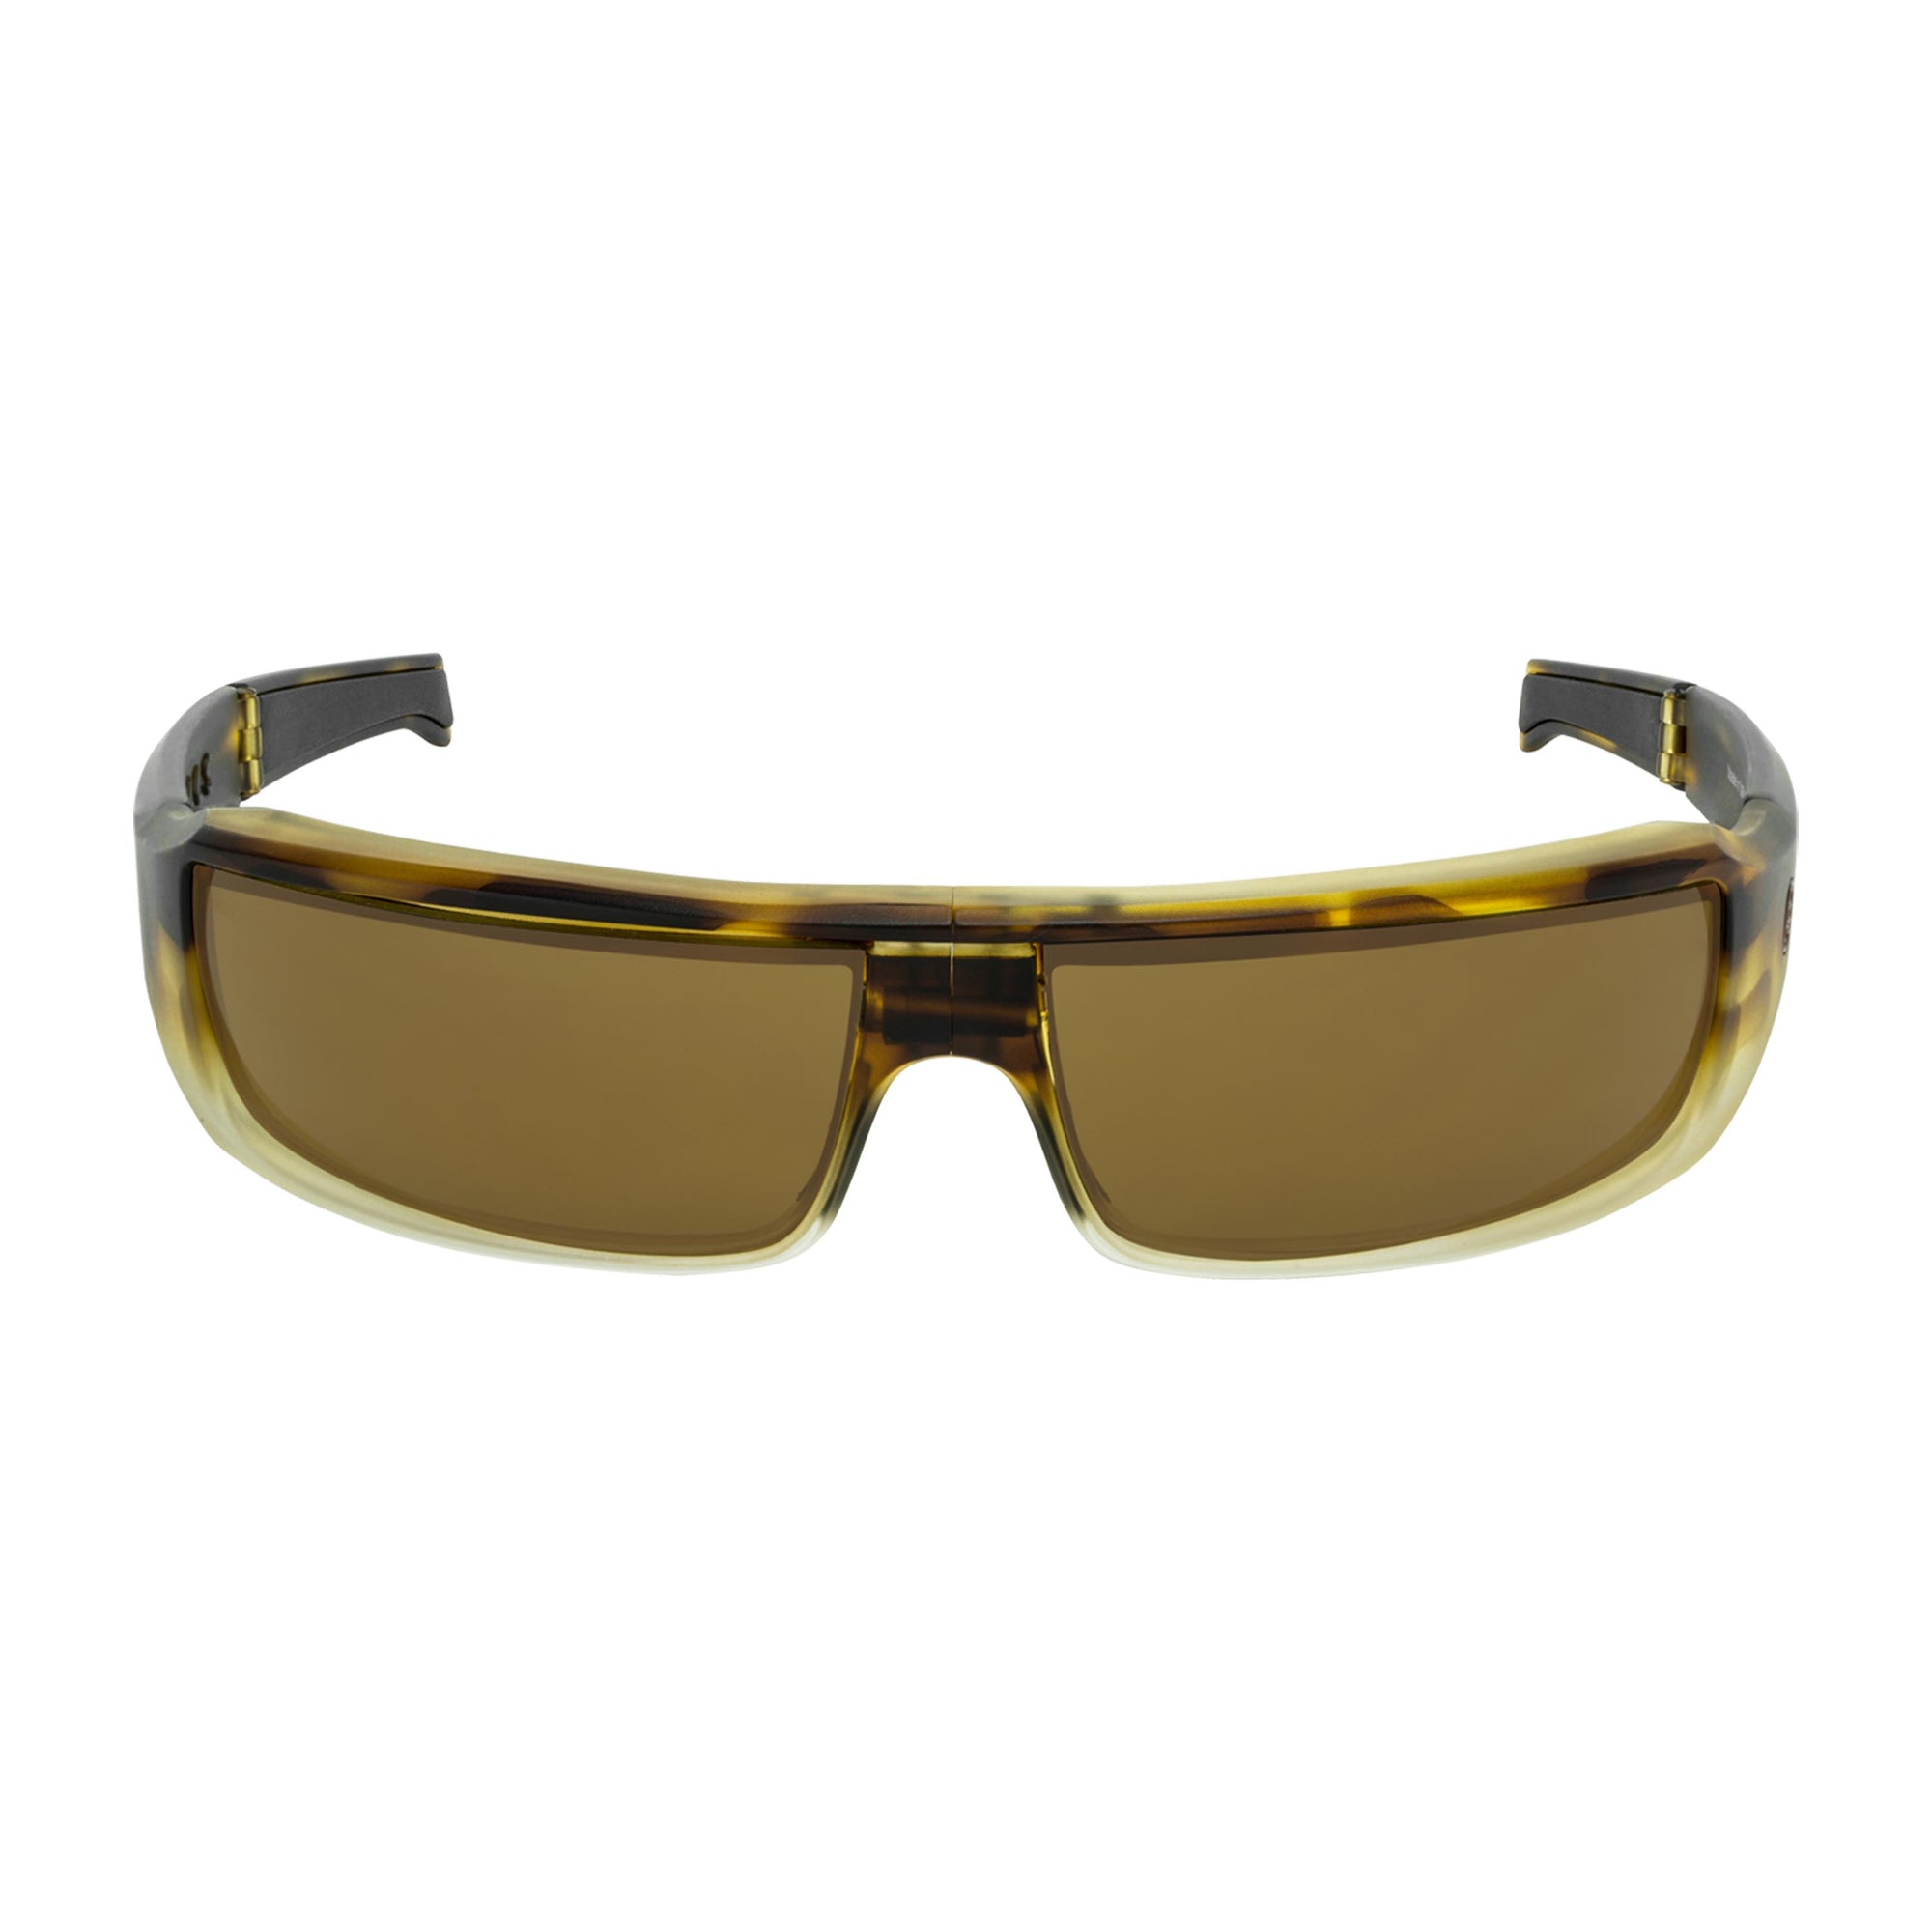 Popticals, Premium Compact Sunglasses, PopSign, 010020-BUNP, Polarized Sunglasses, Matte Tortoise/Crystal Frame, Brown Lenses, Front View